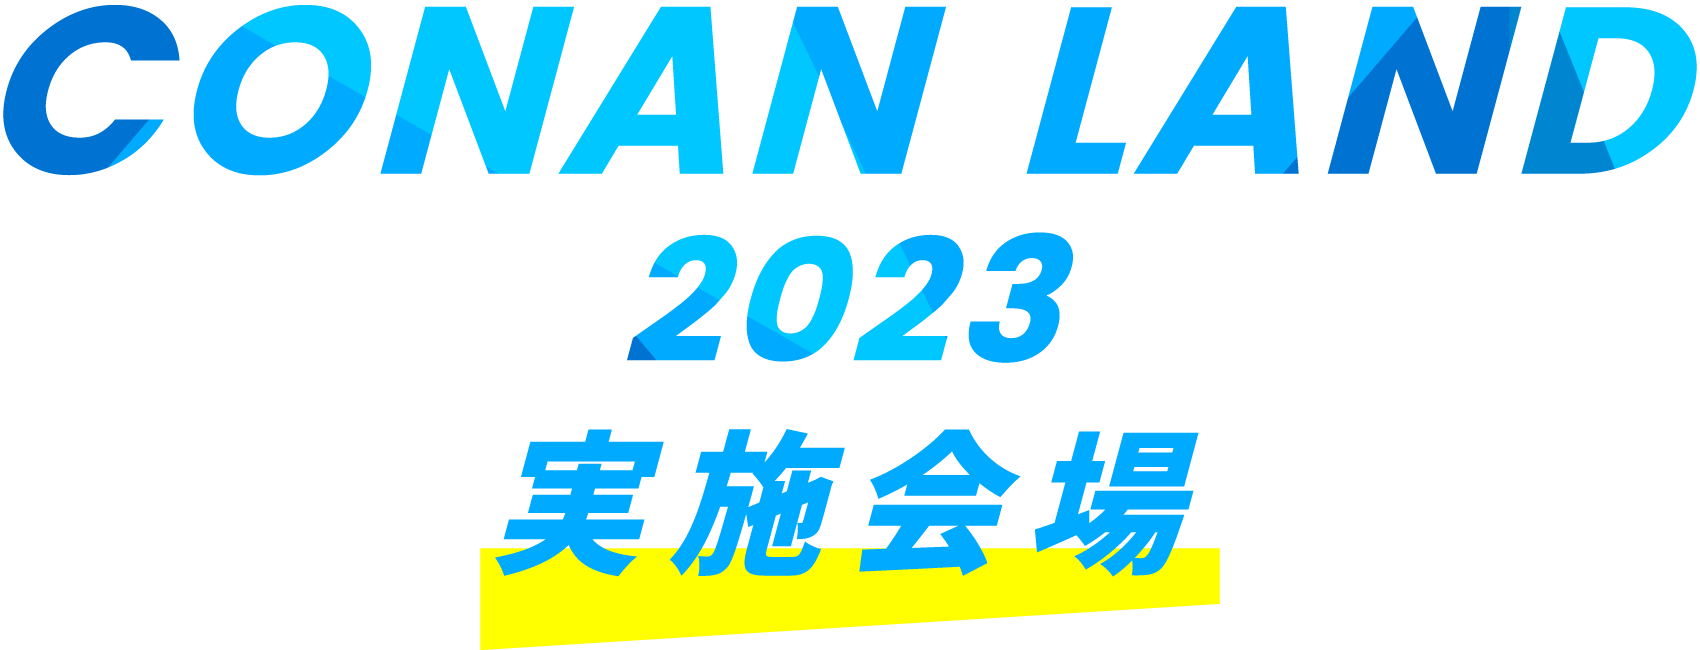 CONAN LAND 2023 実施会場